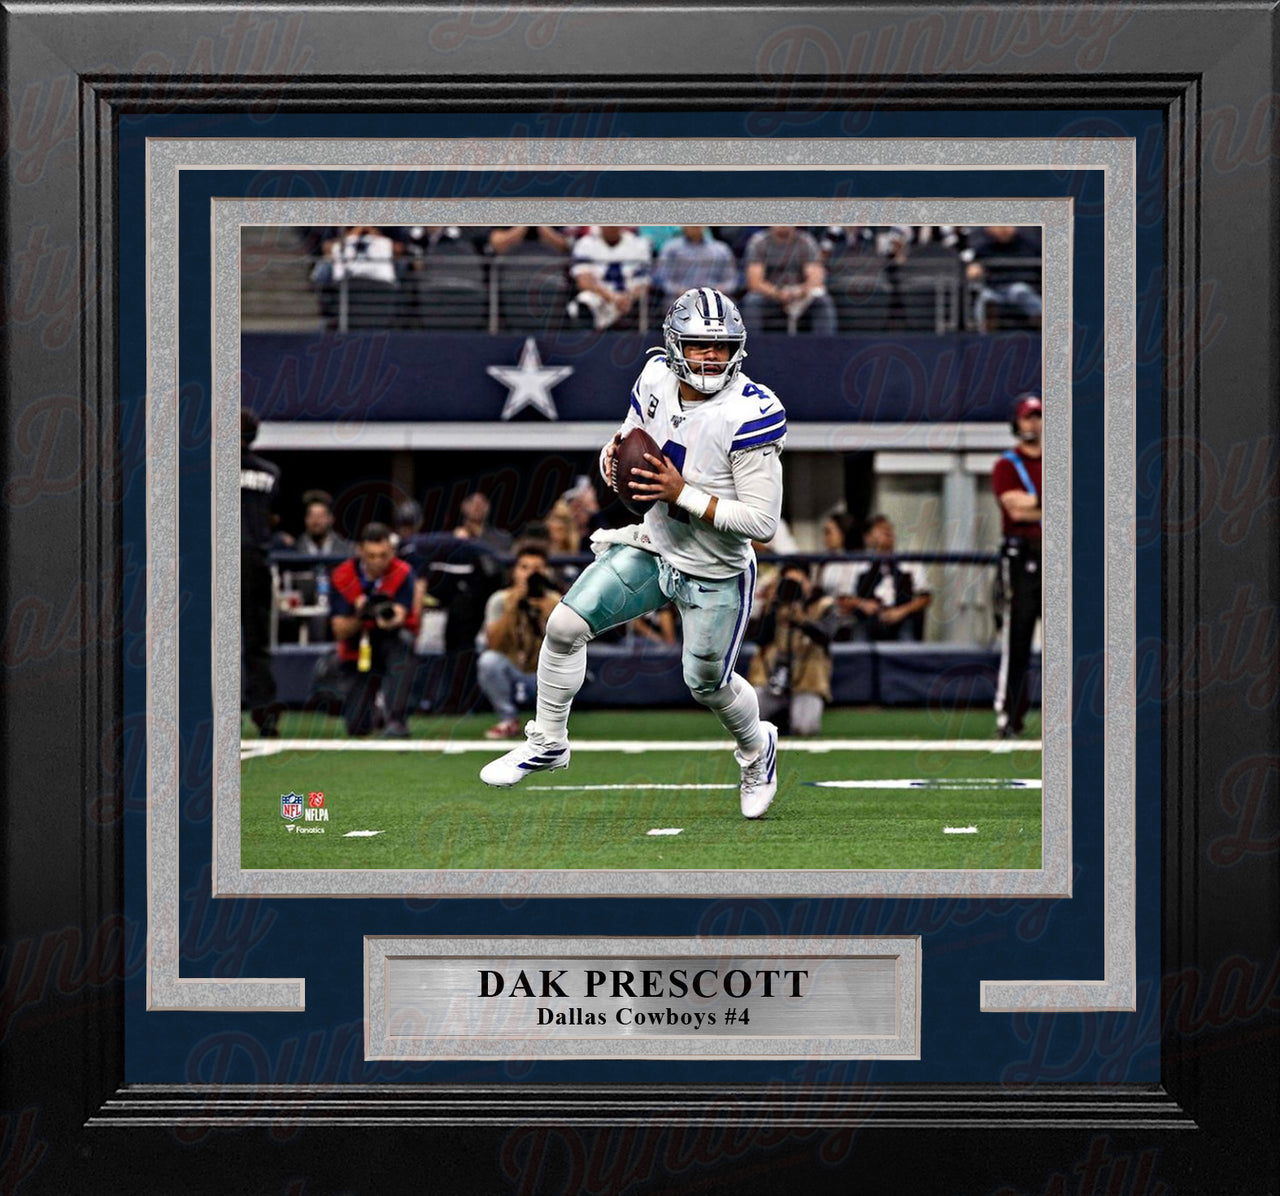 Dak Prescott in Action Dallas Cowboys 8" x 10" Framed Football Photo - Dynasty Sports & Framing 